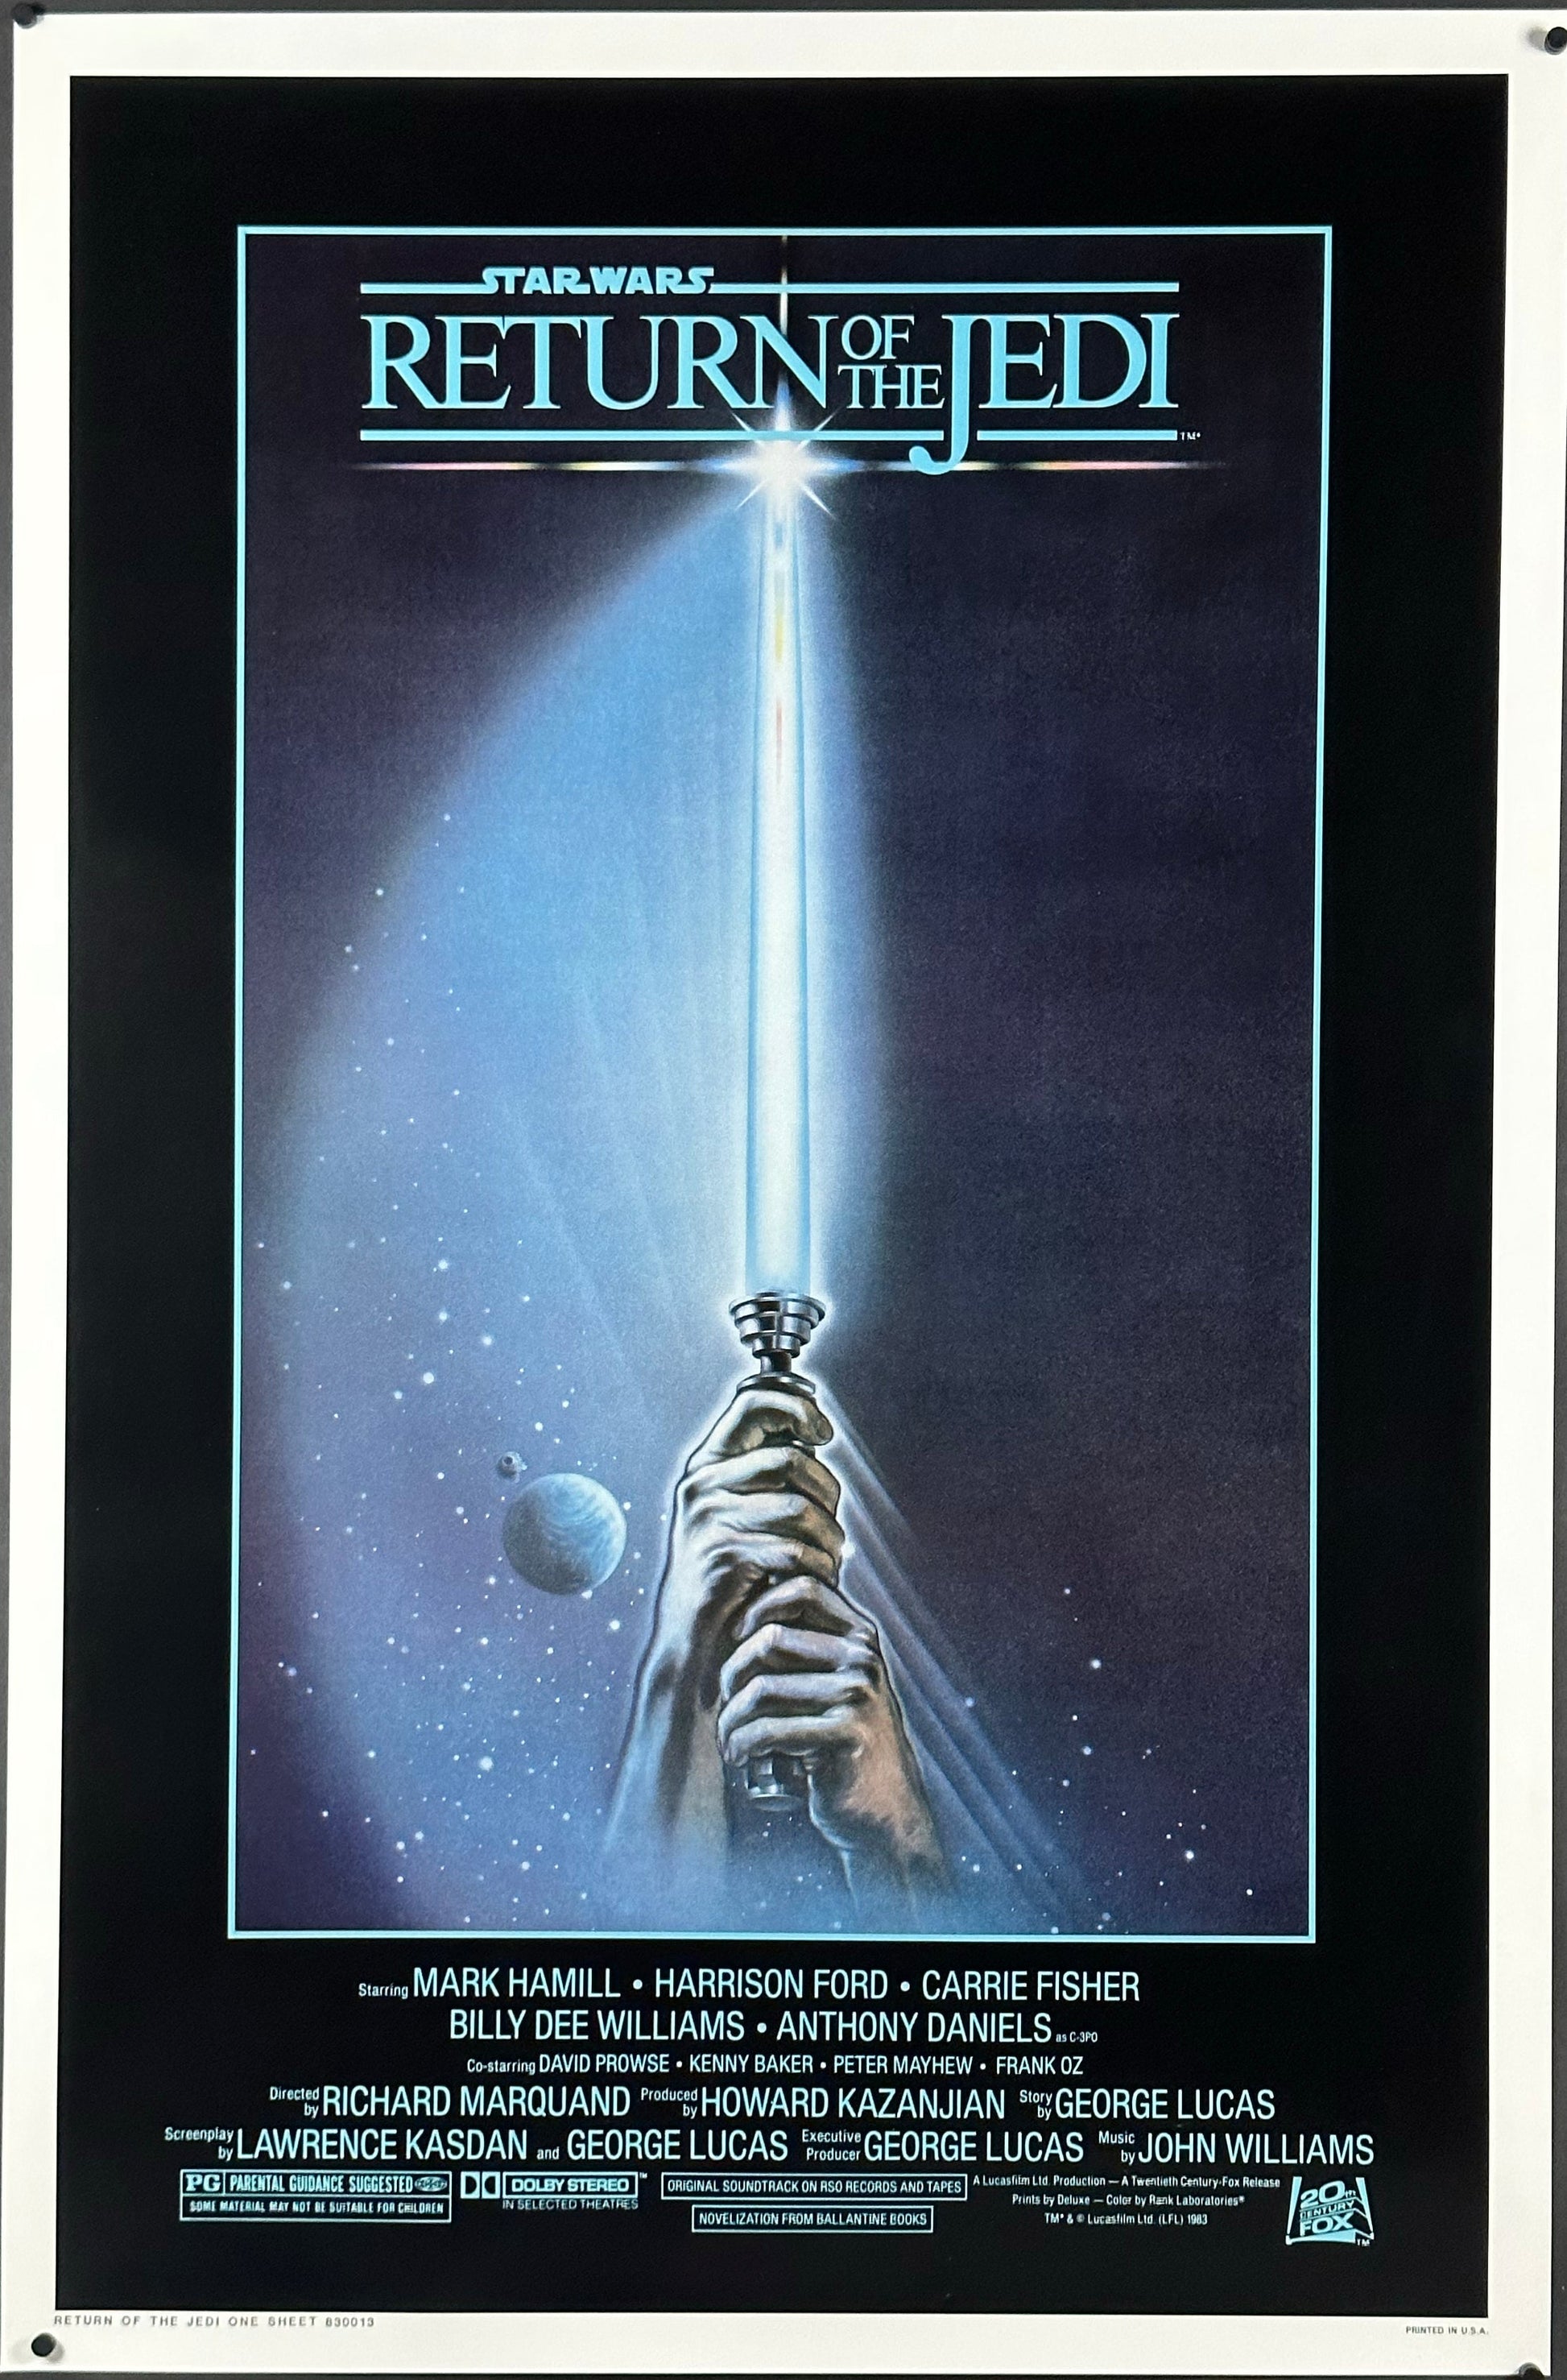 Star Wars: Episode VI - Return of the Jedi US One Sheet (1983) - ORIGINAL RELEASE - posterpalace.com